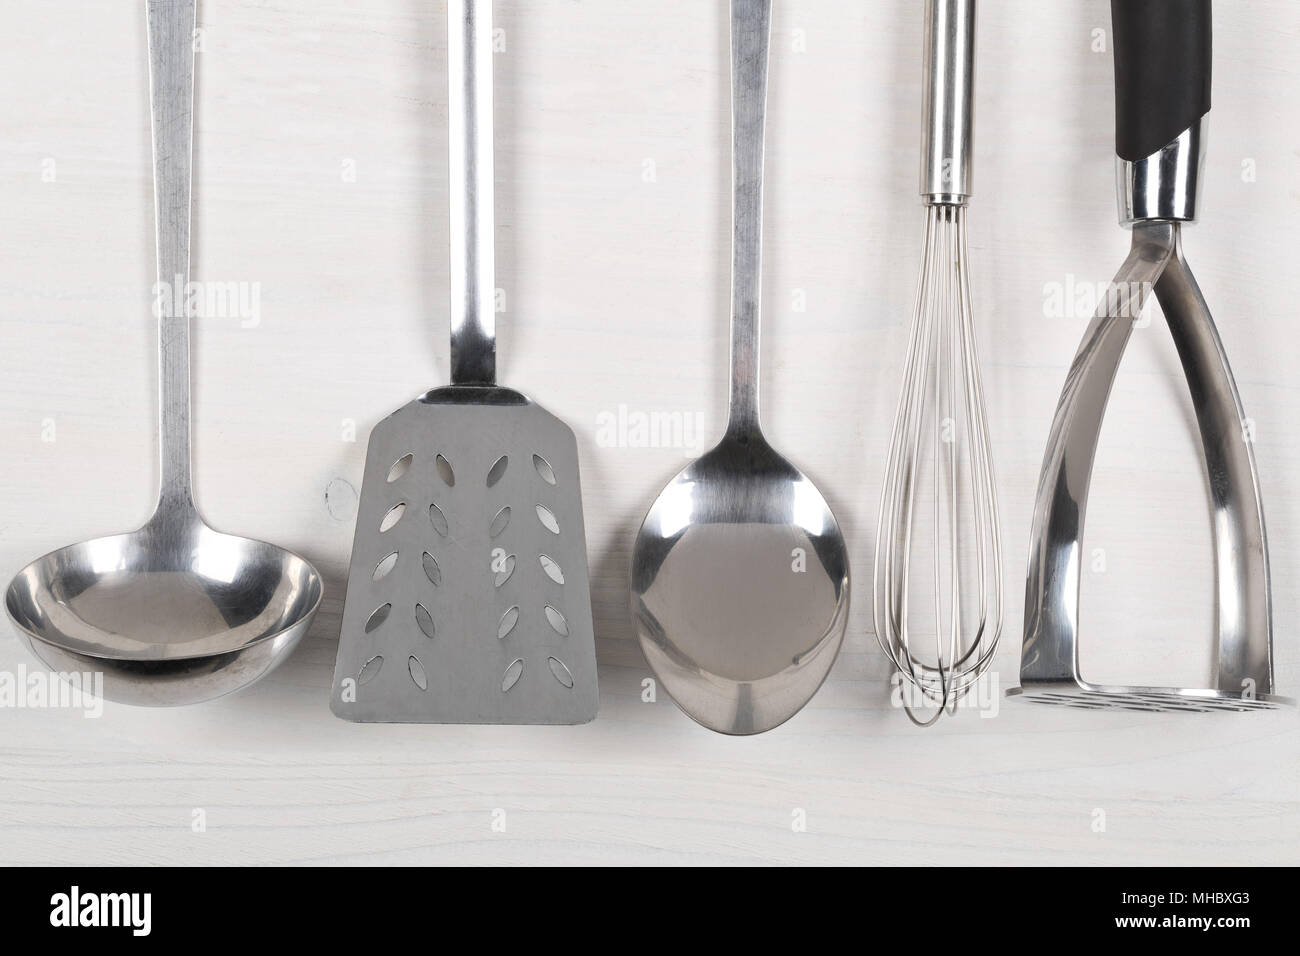 Kitchen utensils for making potato salad – License Images – 12272079 ❘  StockFood